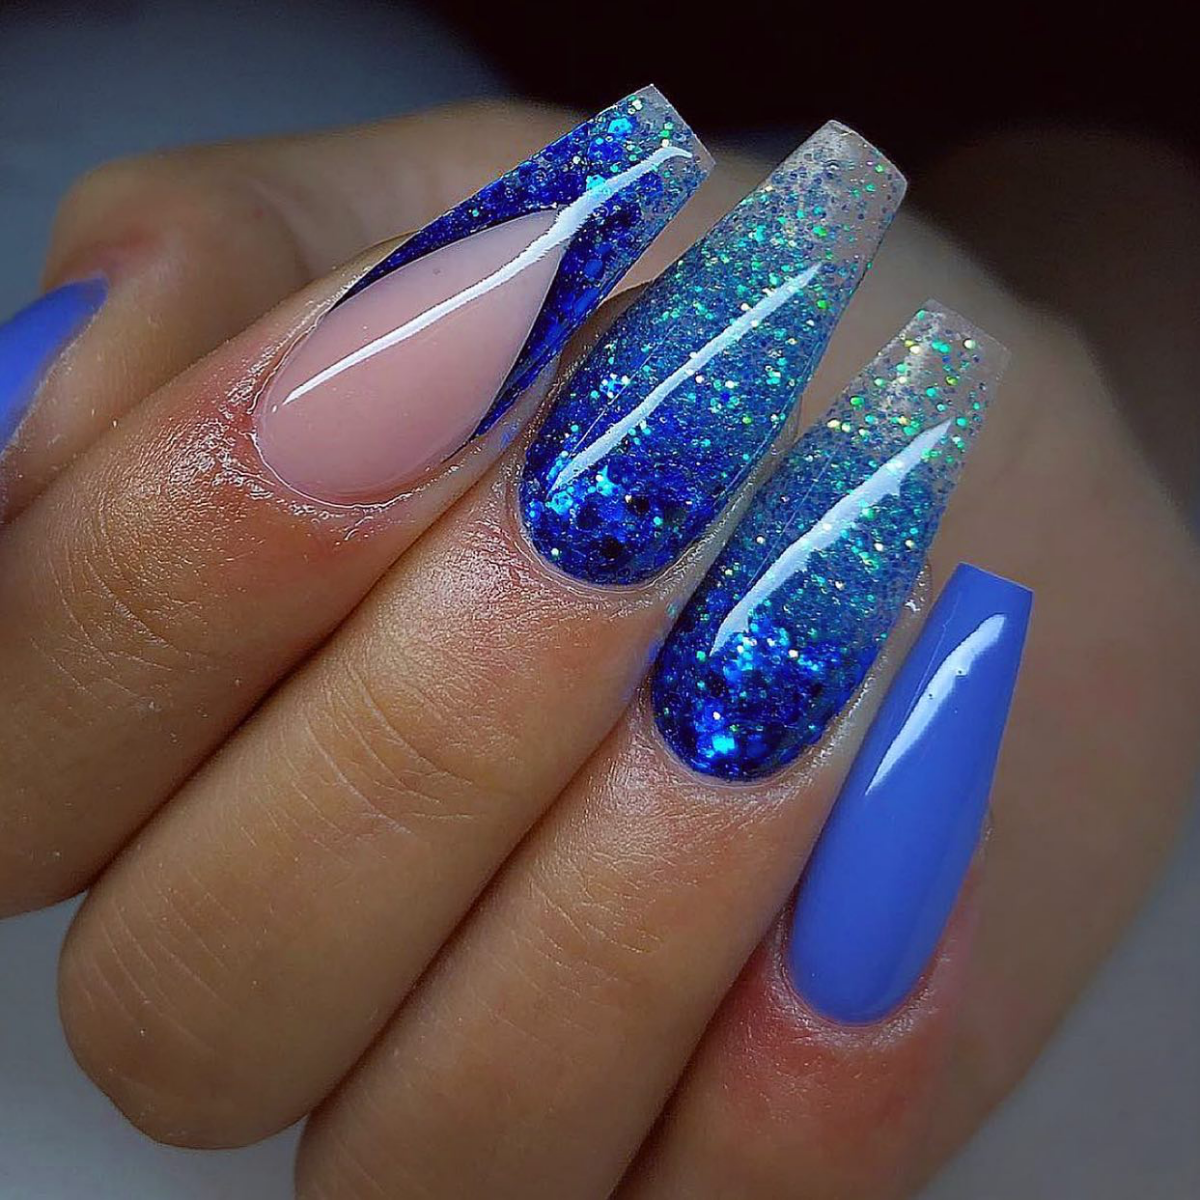 fingernaegel blau jet set beauty nails